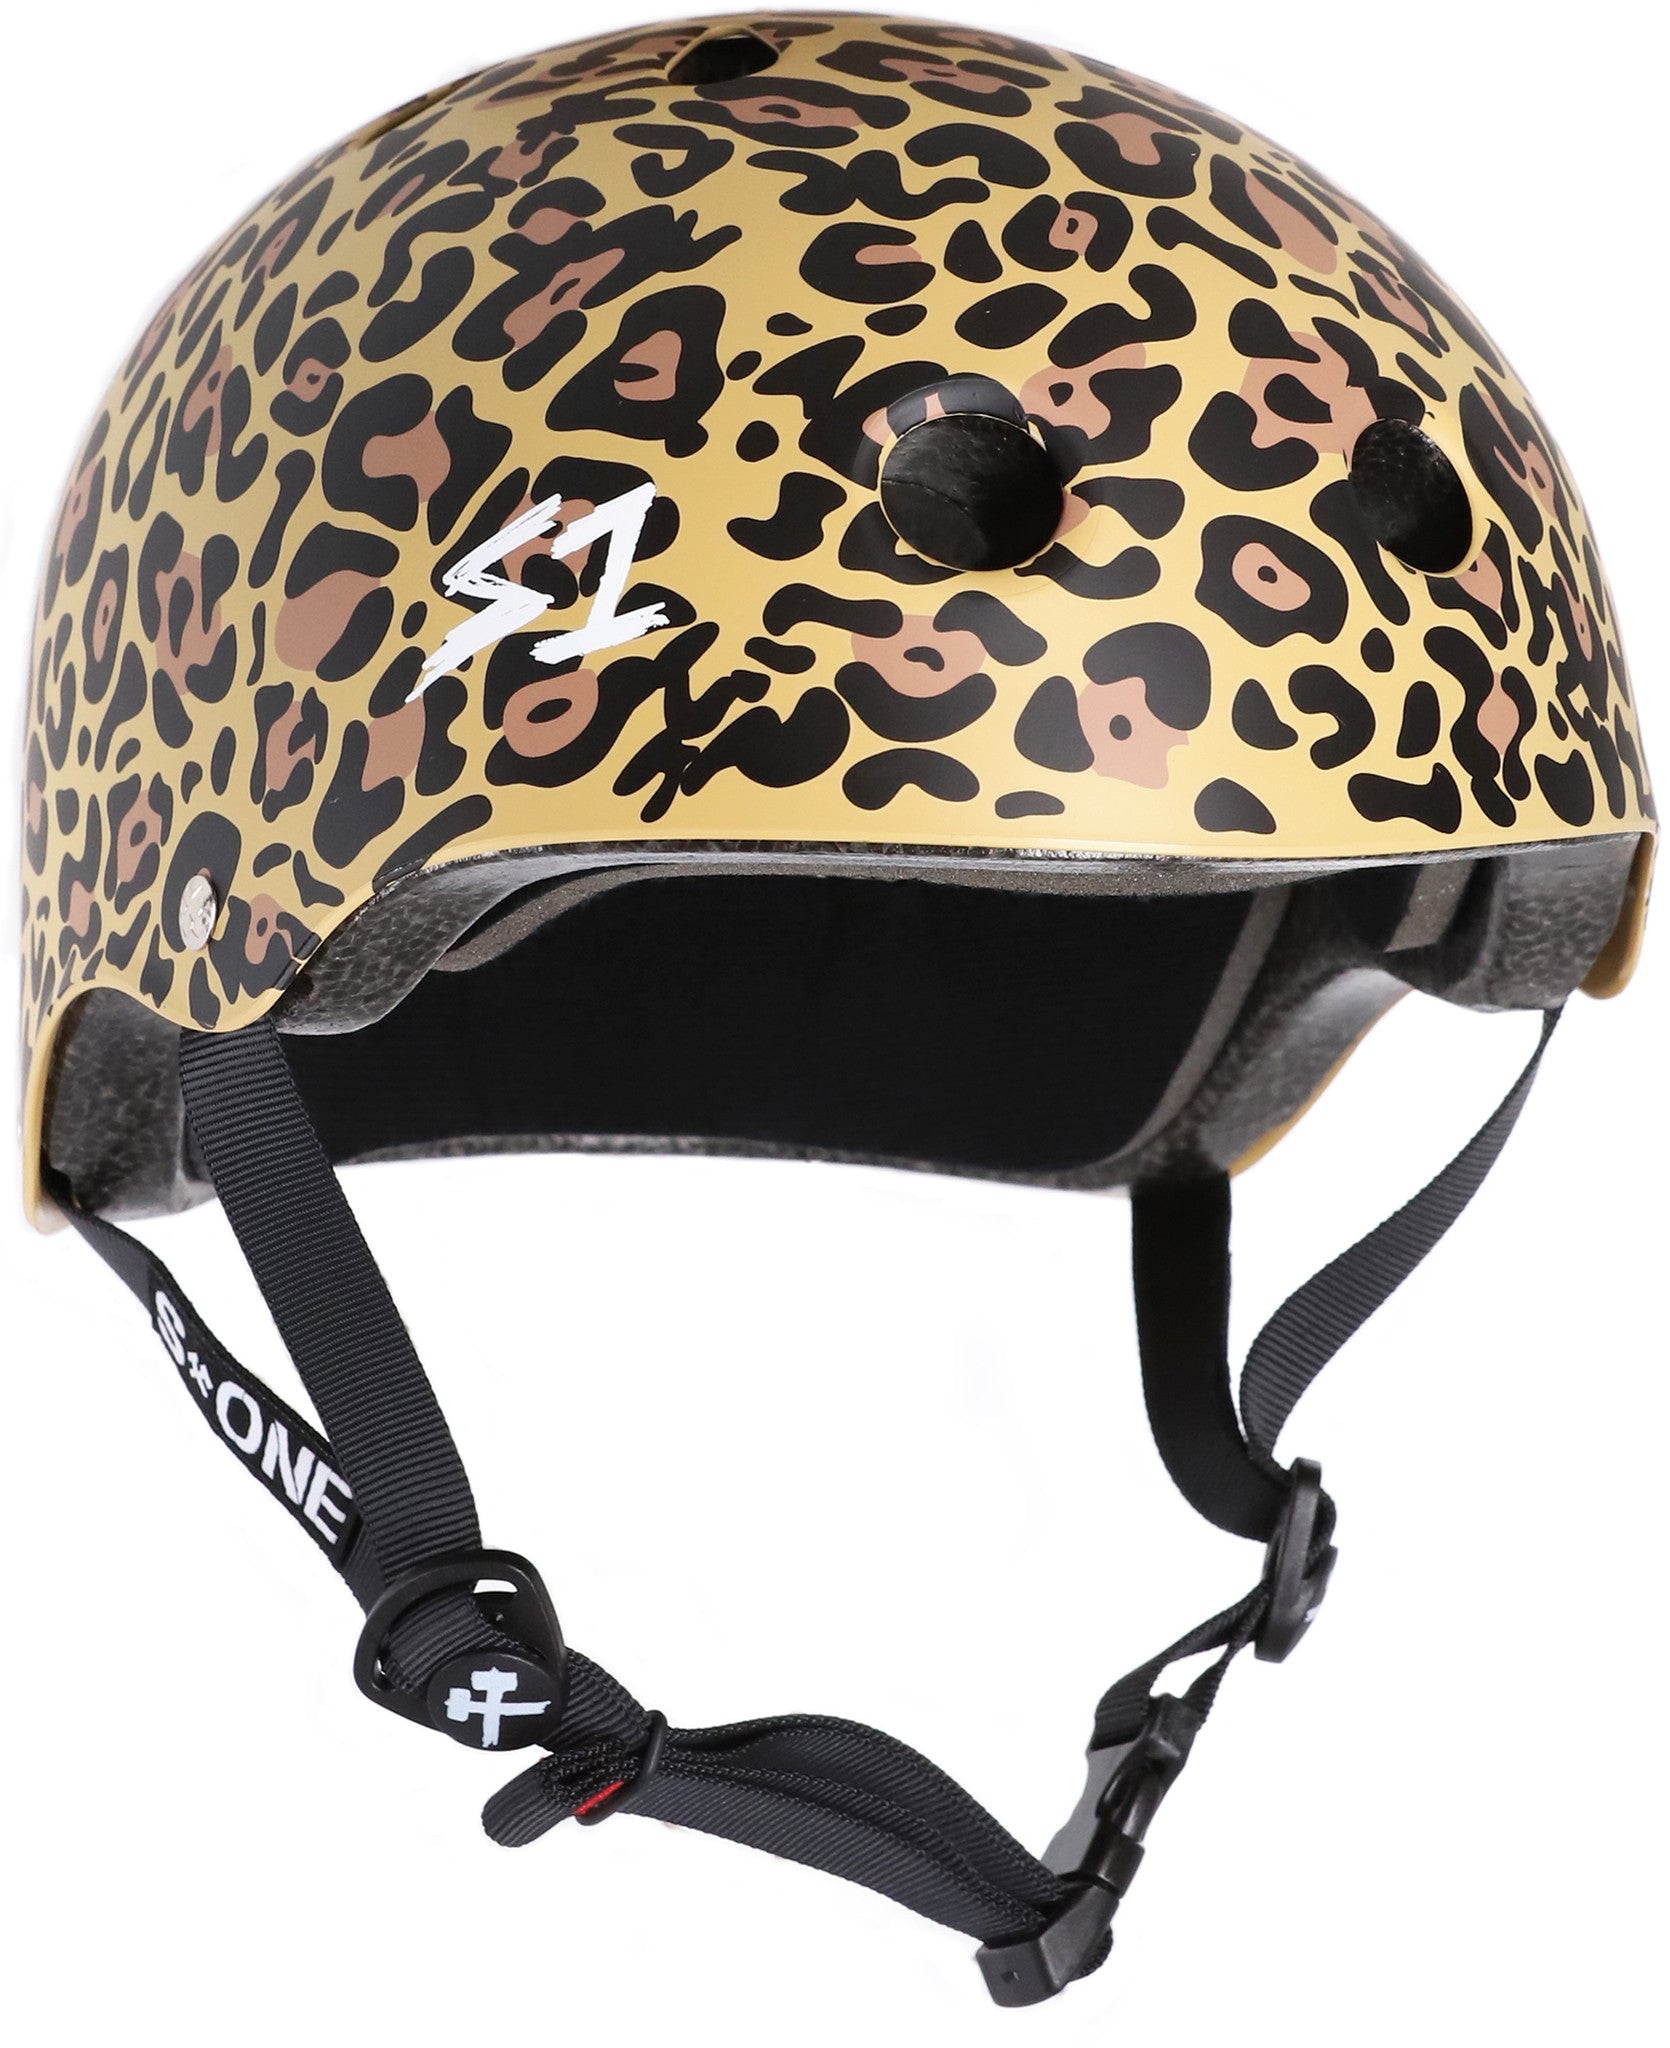 S1 Mega Lifer Helmet - Leopard